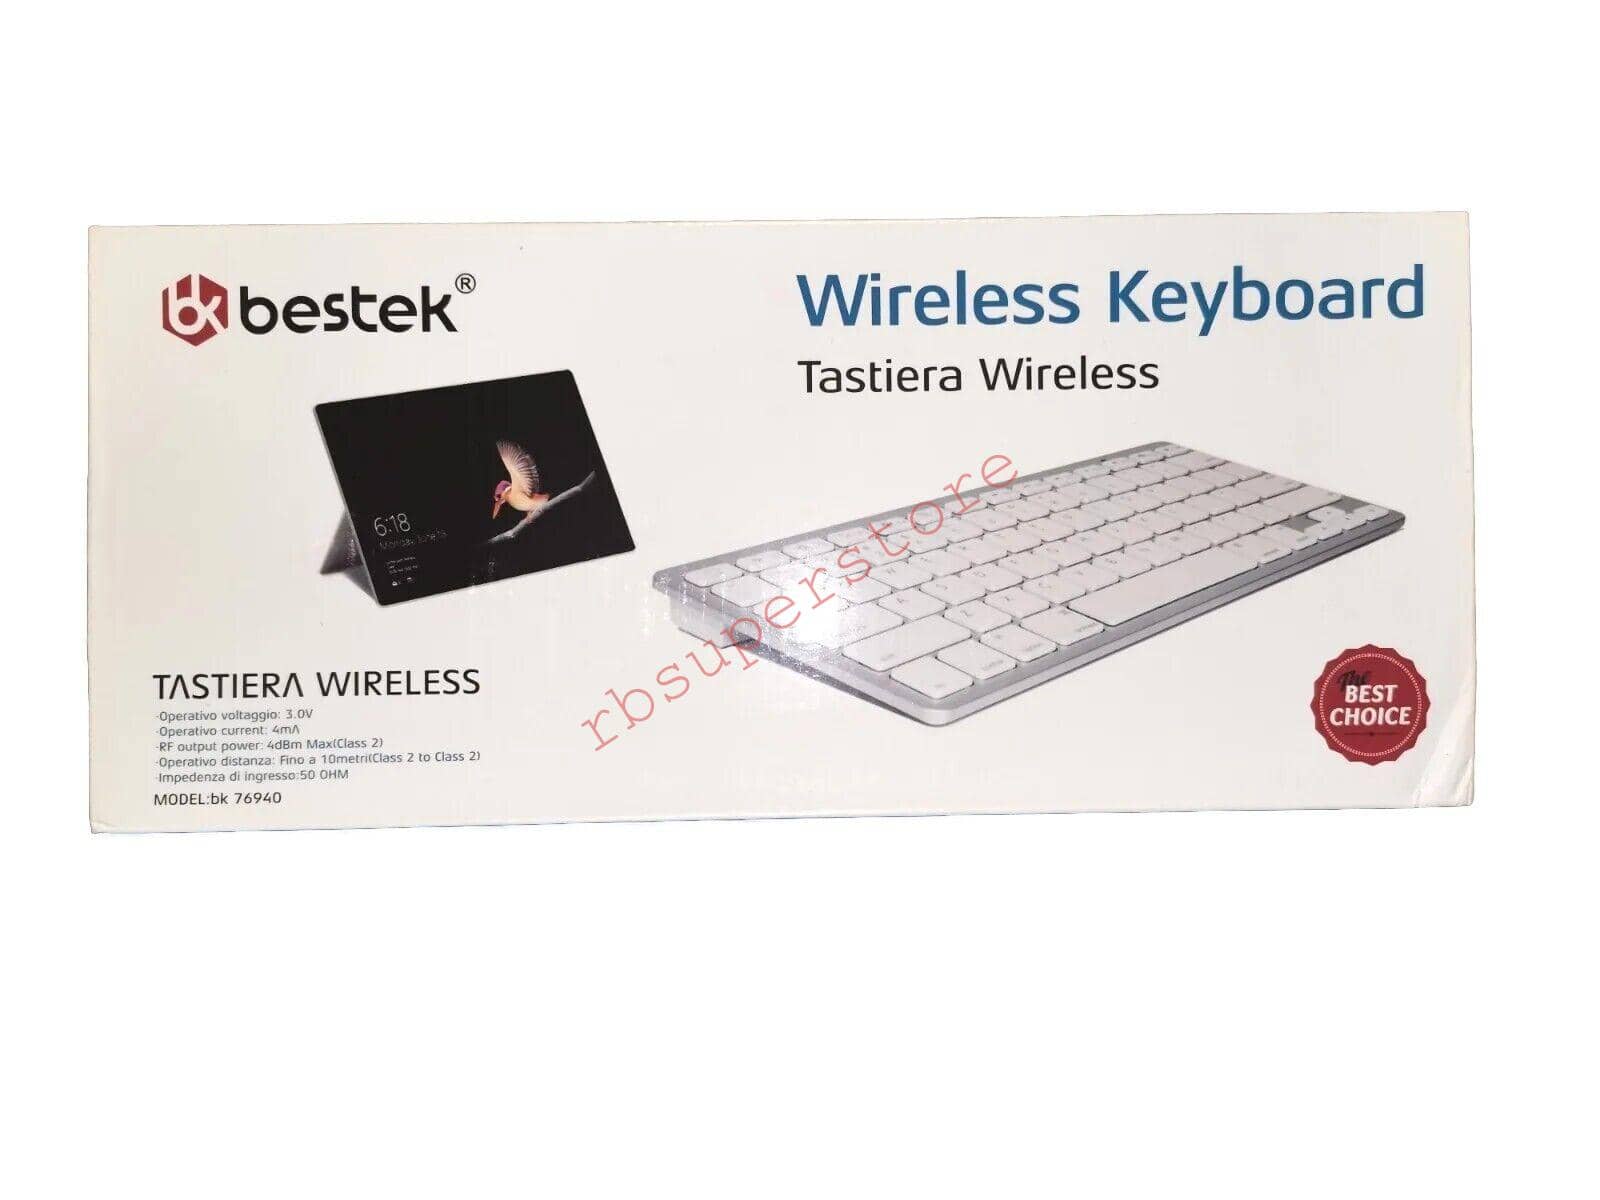 TASTIERA WIRELESS KEYBOARD PORTATILE LEGGERA PER PC TABLET SMARTPHONE -  R.B. Super Store